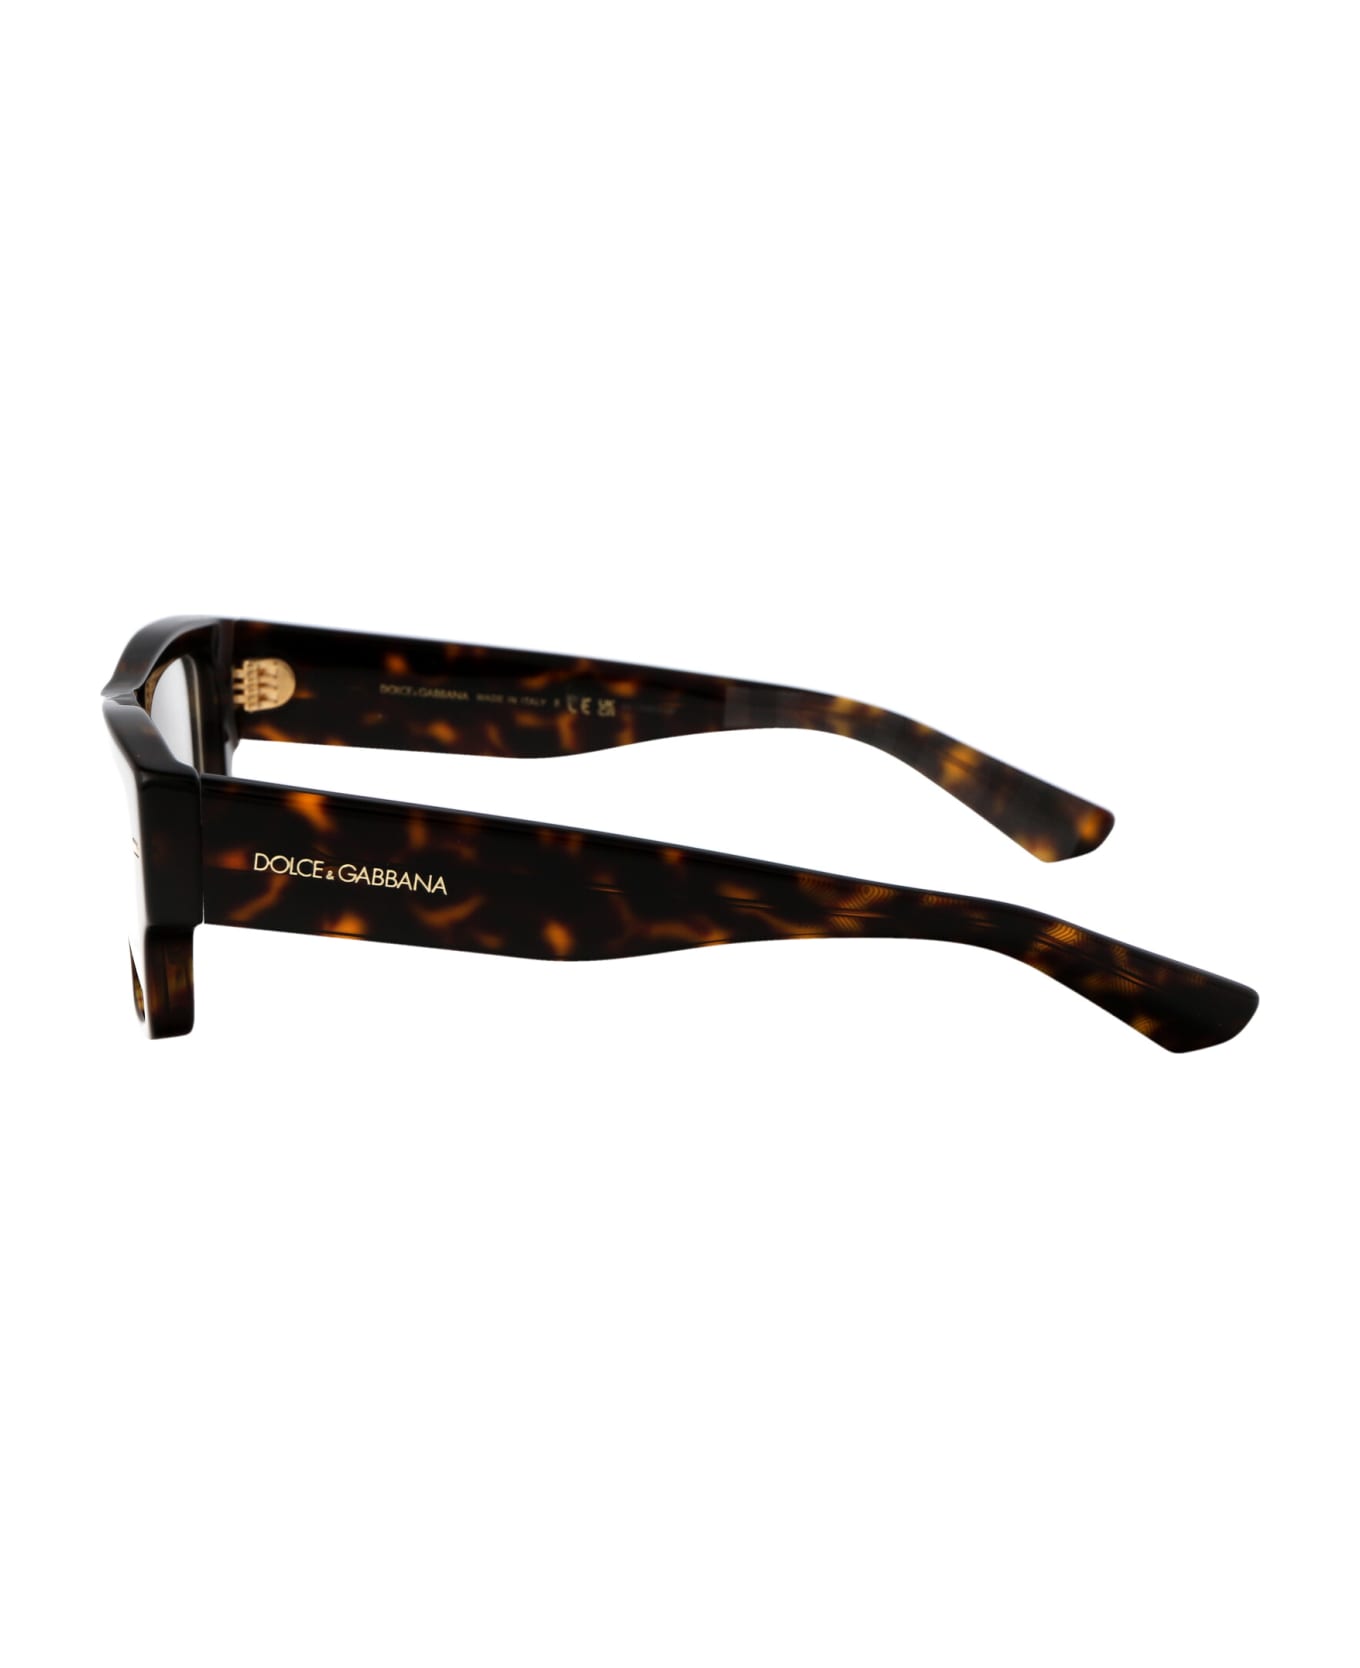 Dolce & Gabbana Eyewear 0dg3379 Glasses - 502 HAVANA アイウェア